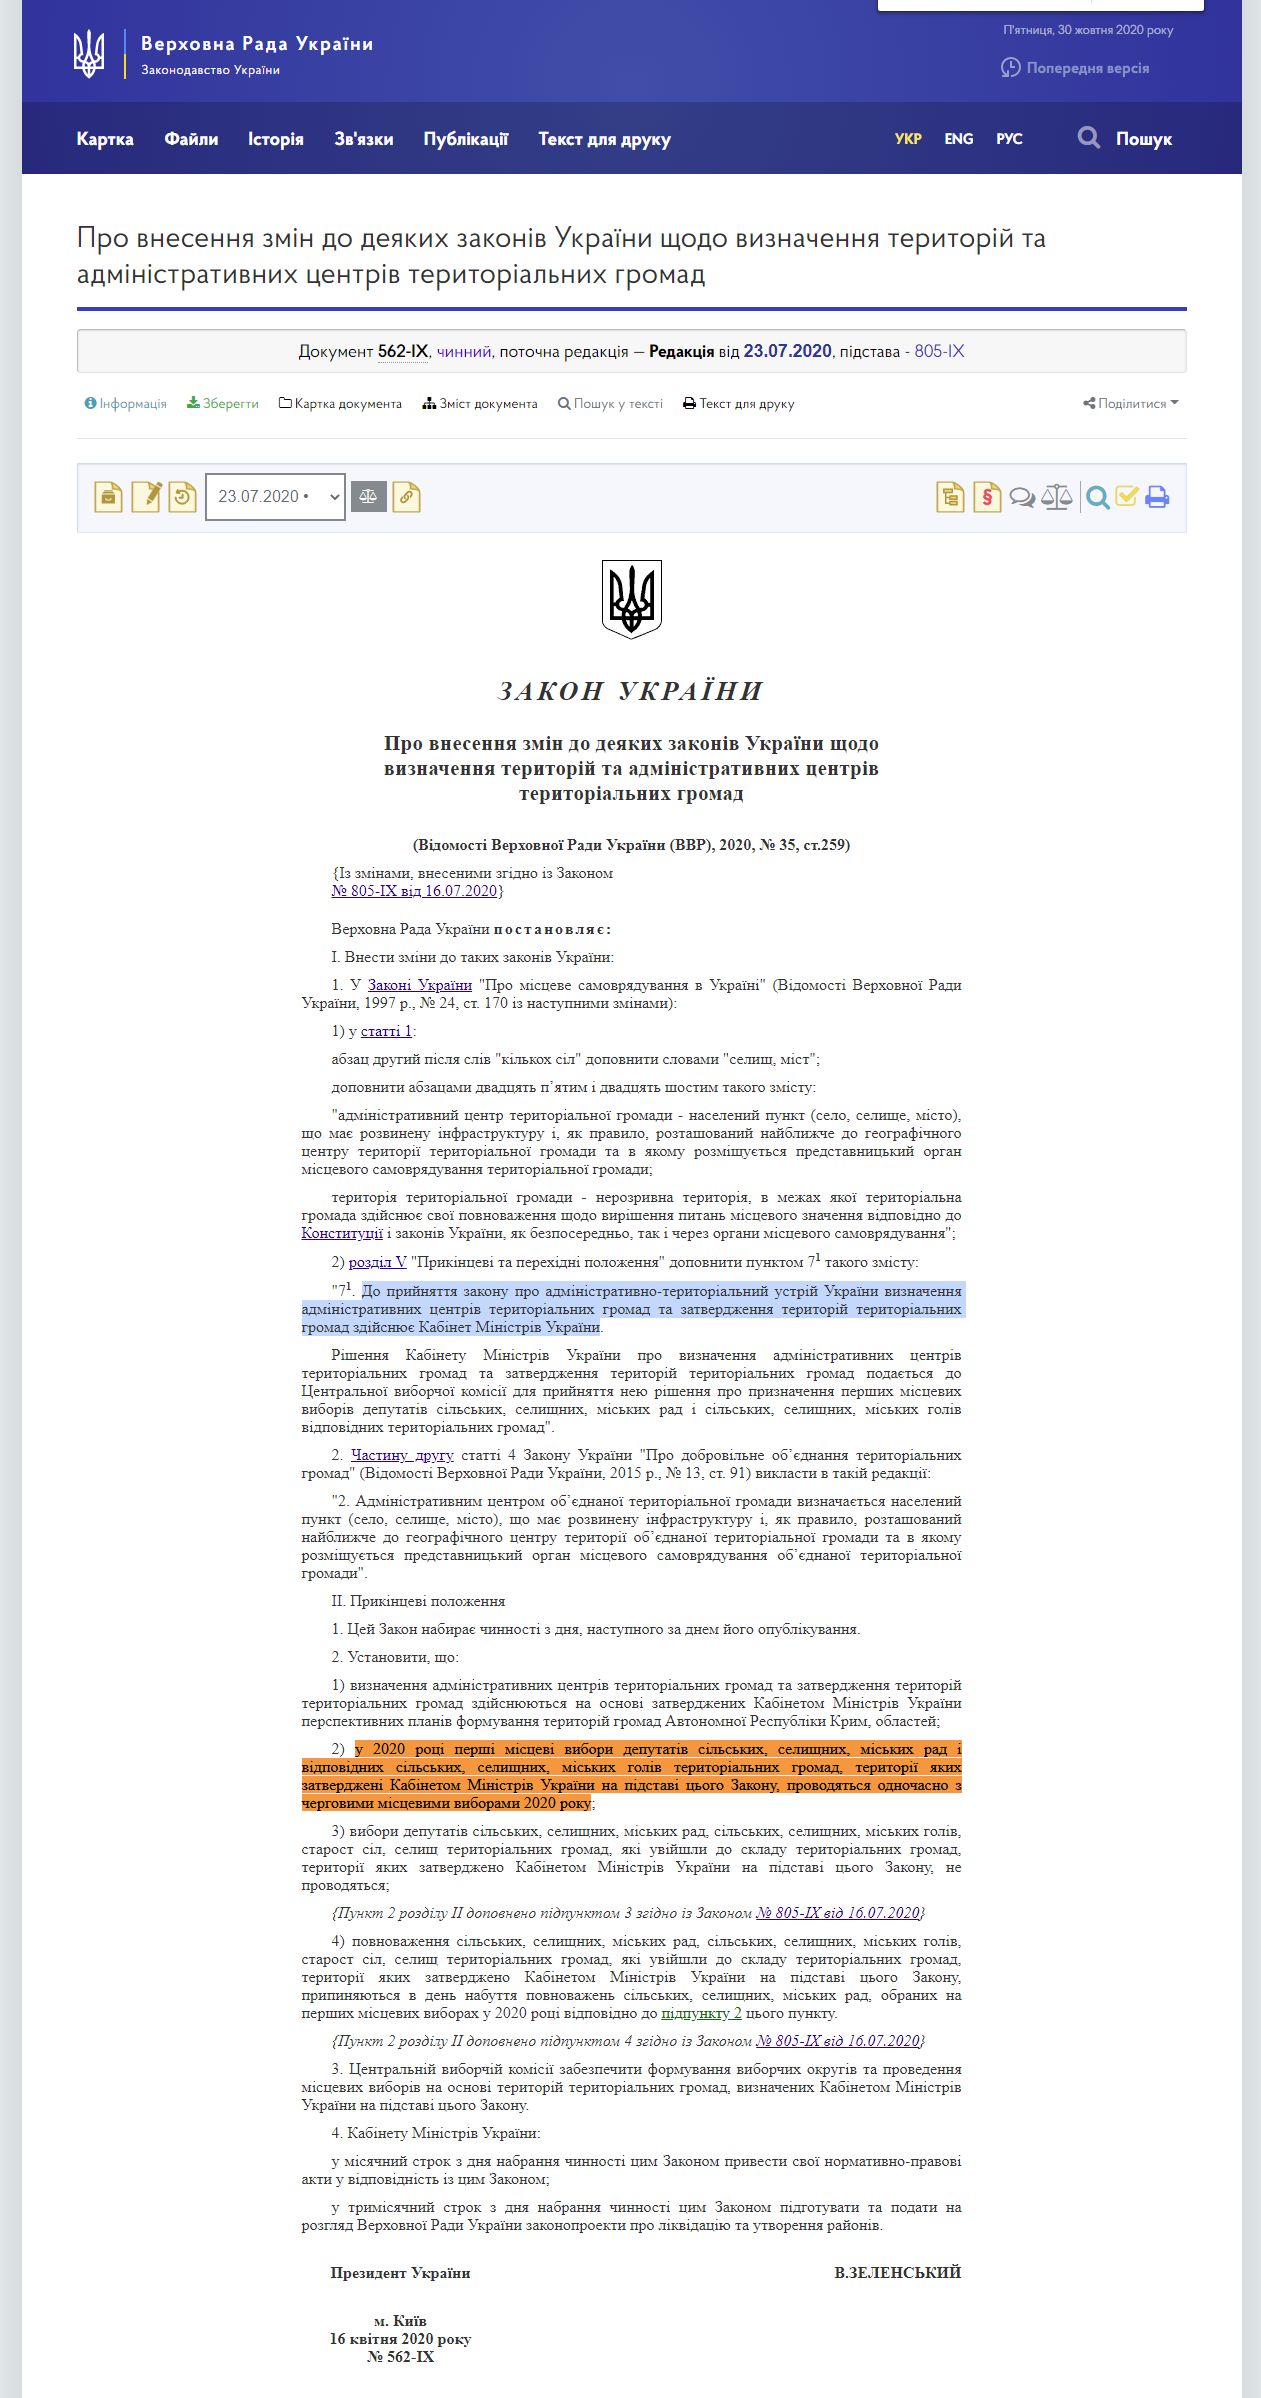 https://zakon.rada.gov.ua/laws/show/562-IX#Text